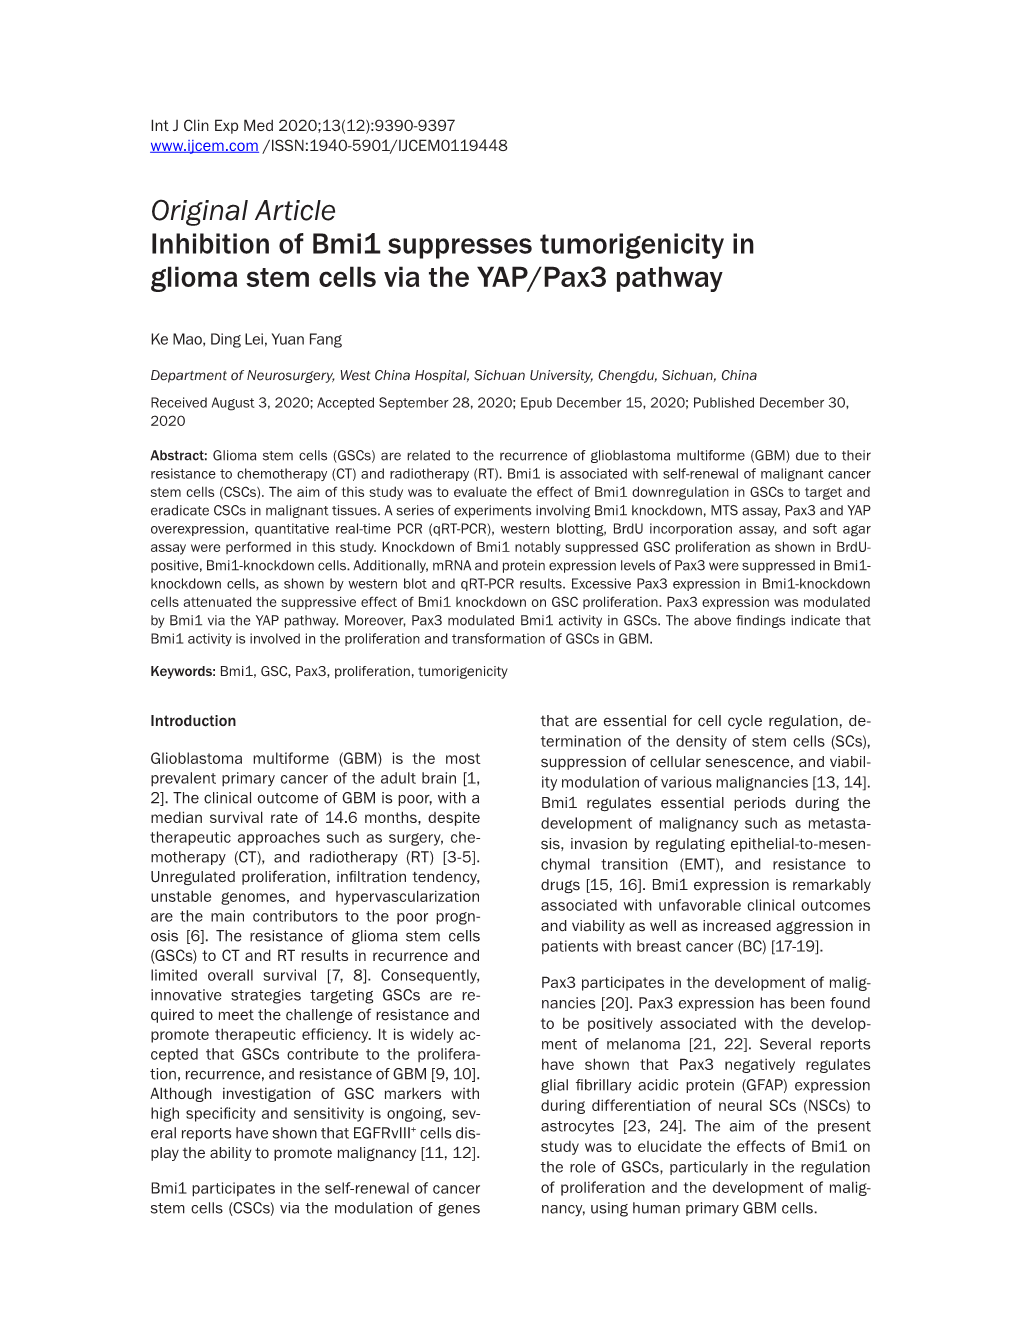 Original Article Inhibition of Bmi1 Suppresses Tumorigenicity in Glioma Stem Cells Via the YAP/Pax3 Pathway